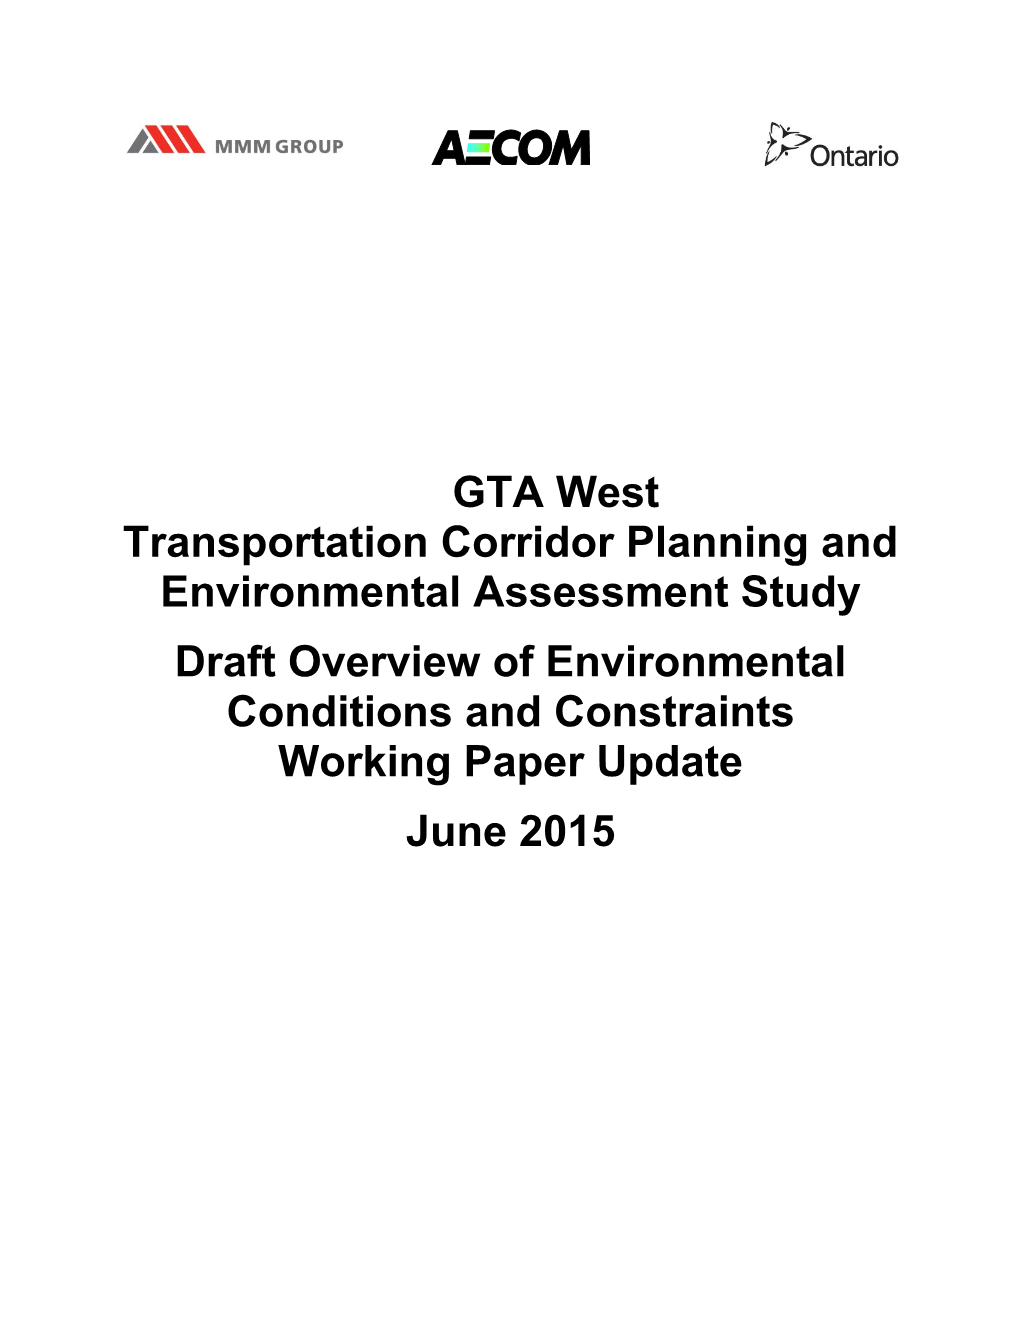 GTA West Transportation Corridor Planning and Environmental